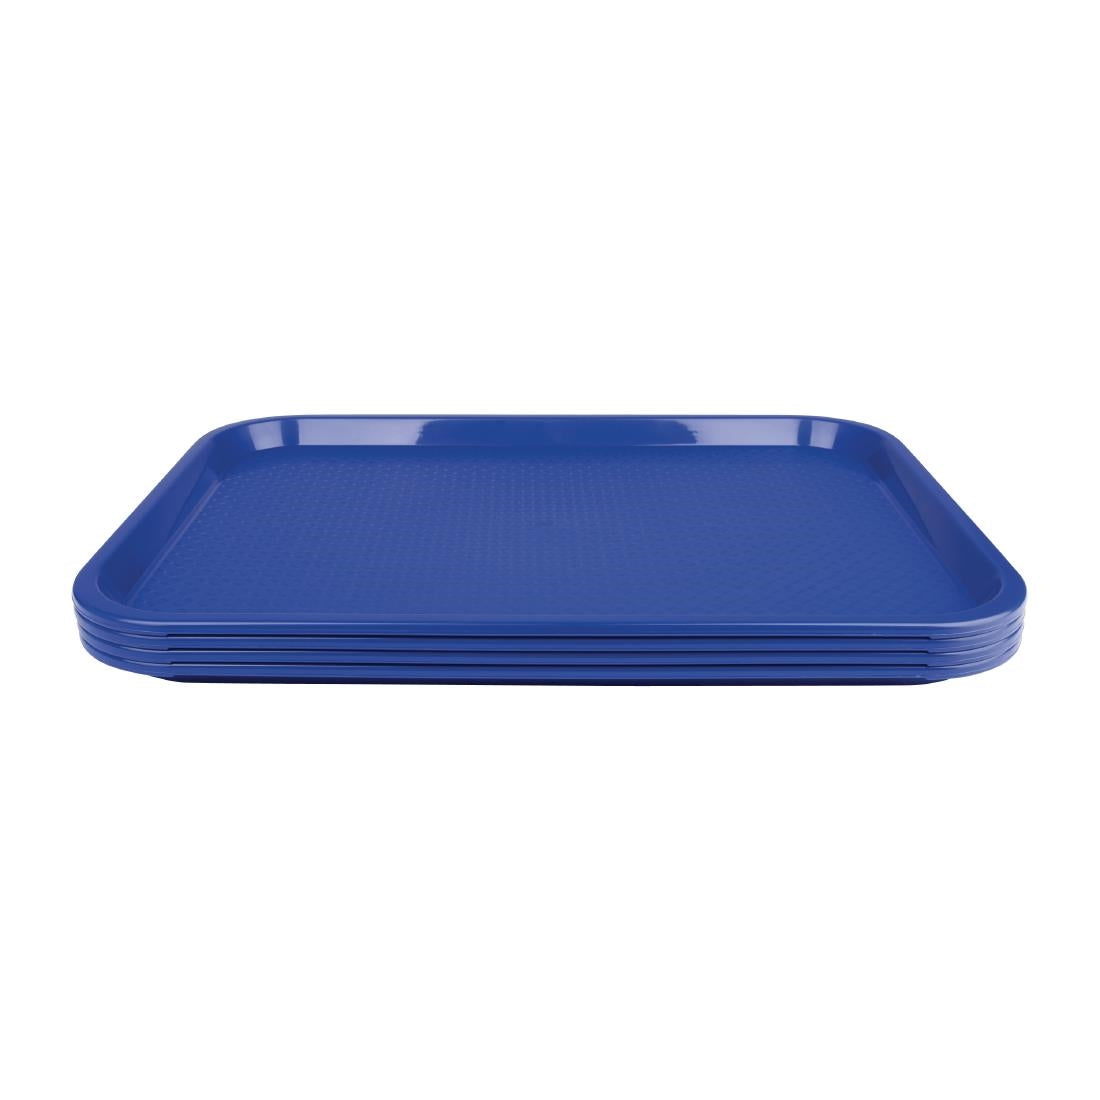 Kristallon Medium Polypropylene Fast Food Tray Blue 415mm JD Catering Equipment Solutions Ltd